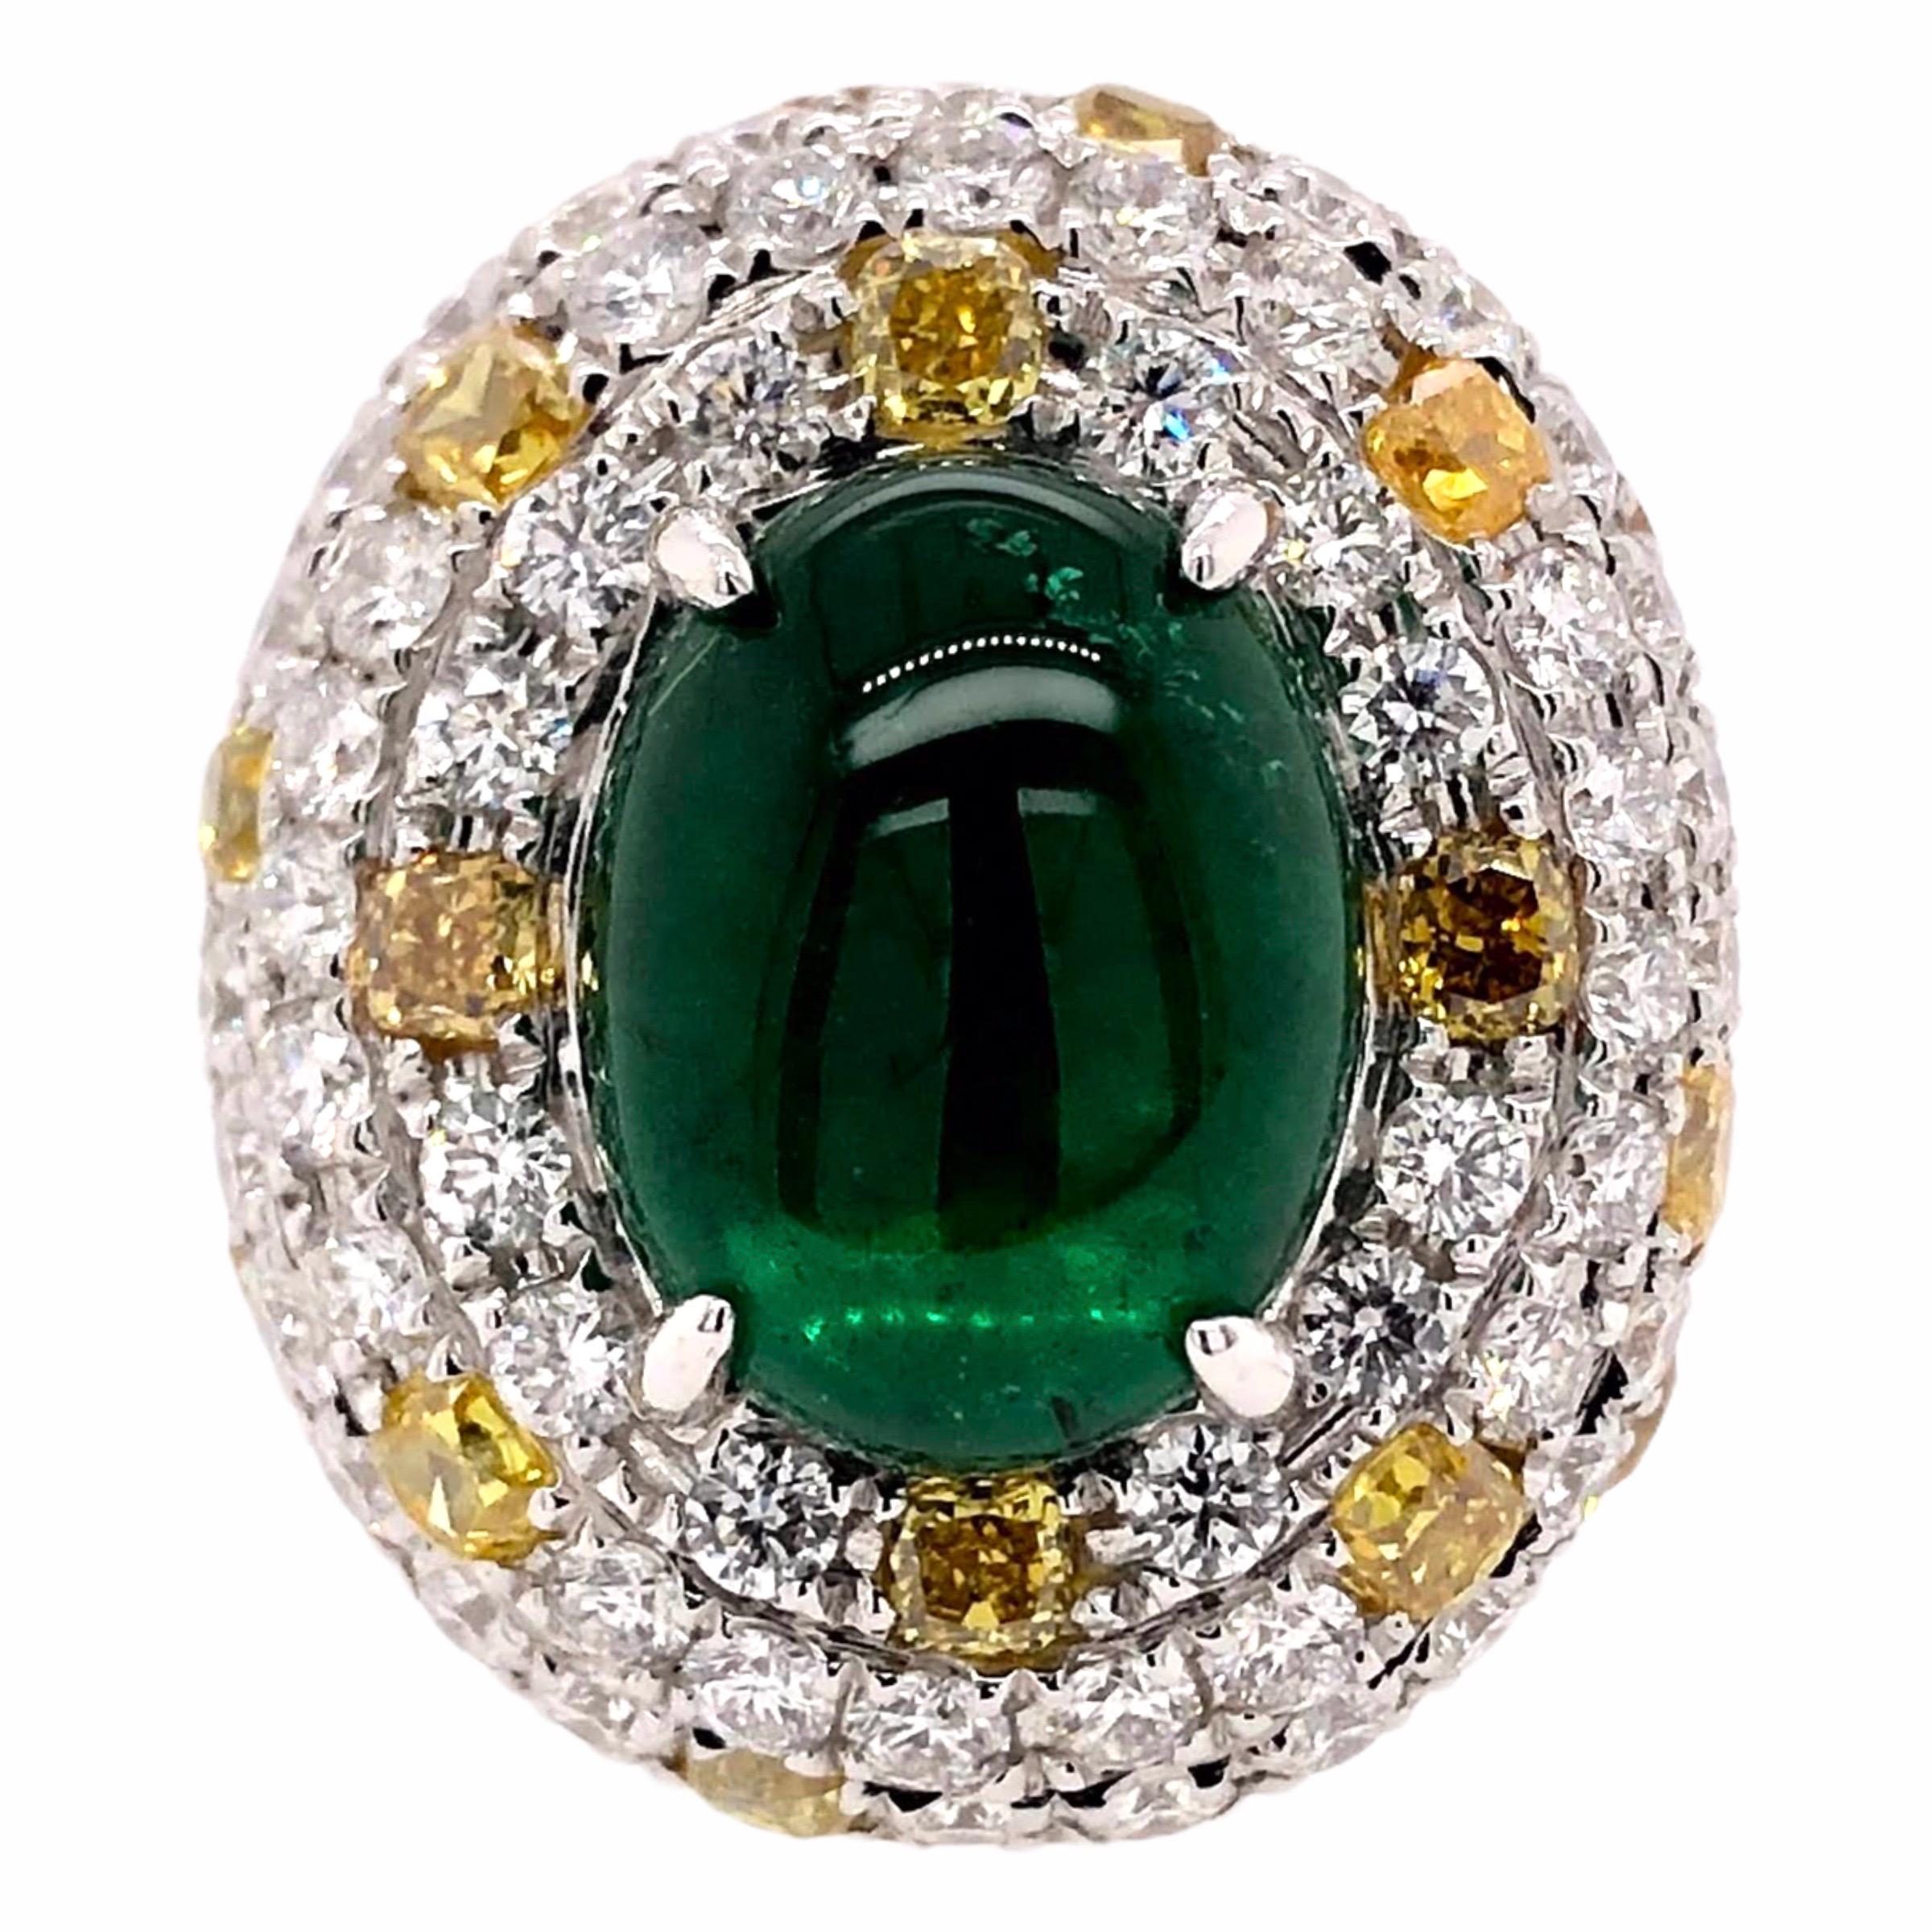 PARIS Craft House 5.31ct Cabochon Emerald Yellow Diamond Ring in 18 Karat White Gold.

- 1 Cabochon Emerald/5.31ct
- 18 Yellow Diamonds/1.52ct
- 78 Round Diamonds/2.24ct
- 18K White Gold/13.48g

Designed and crafted at PARIS Craft House.